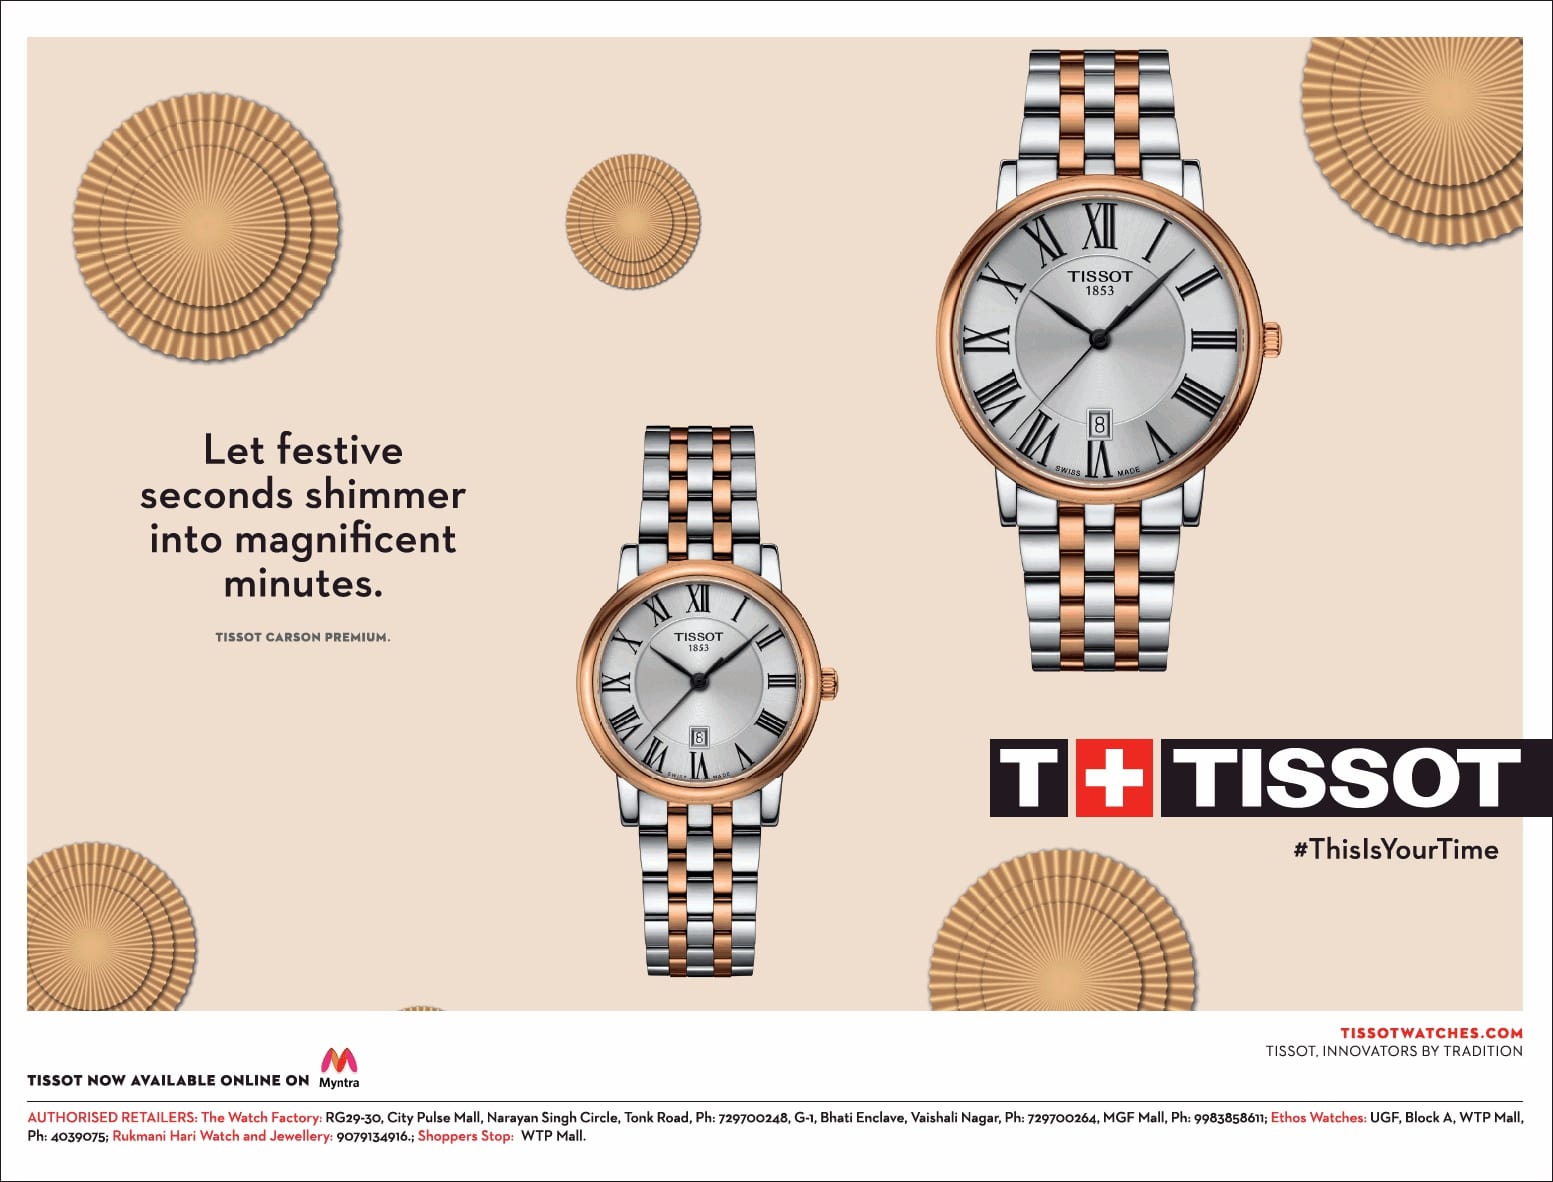 tissot-carson-premium-couple-watch-let-festive-seconds-shimmer-into-magnificent-minutes-ad-toi-jaipur-6-11-2020